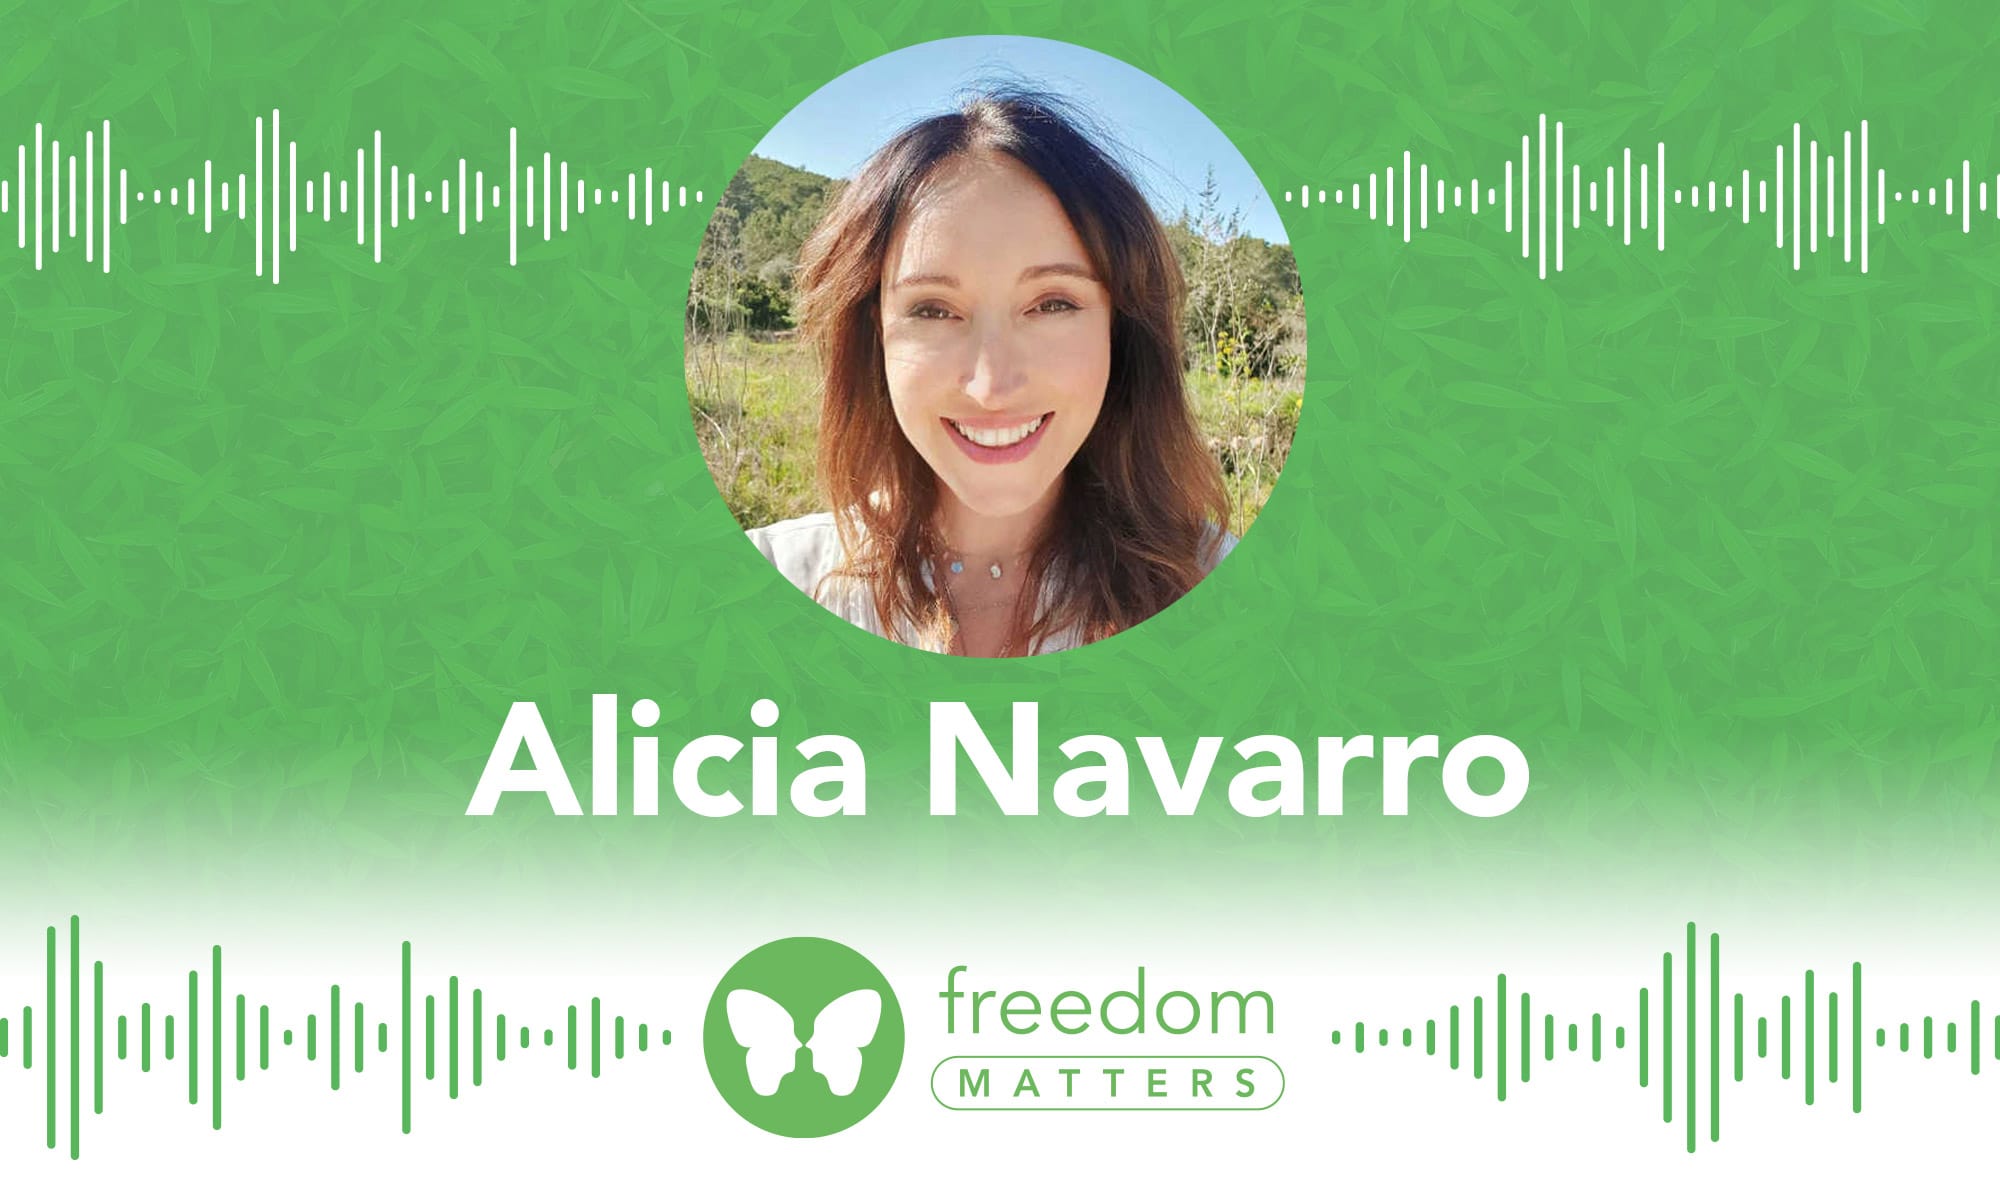 Alicia Navarro Freedom Matters